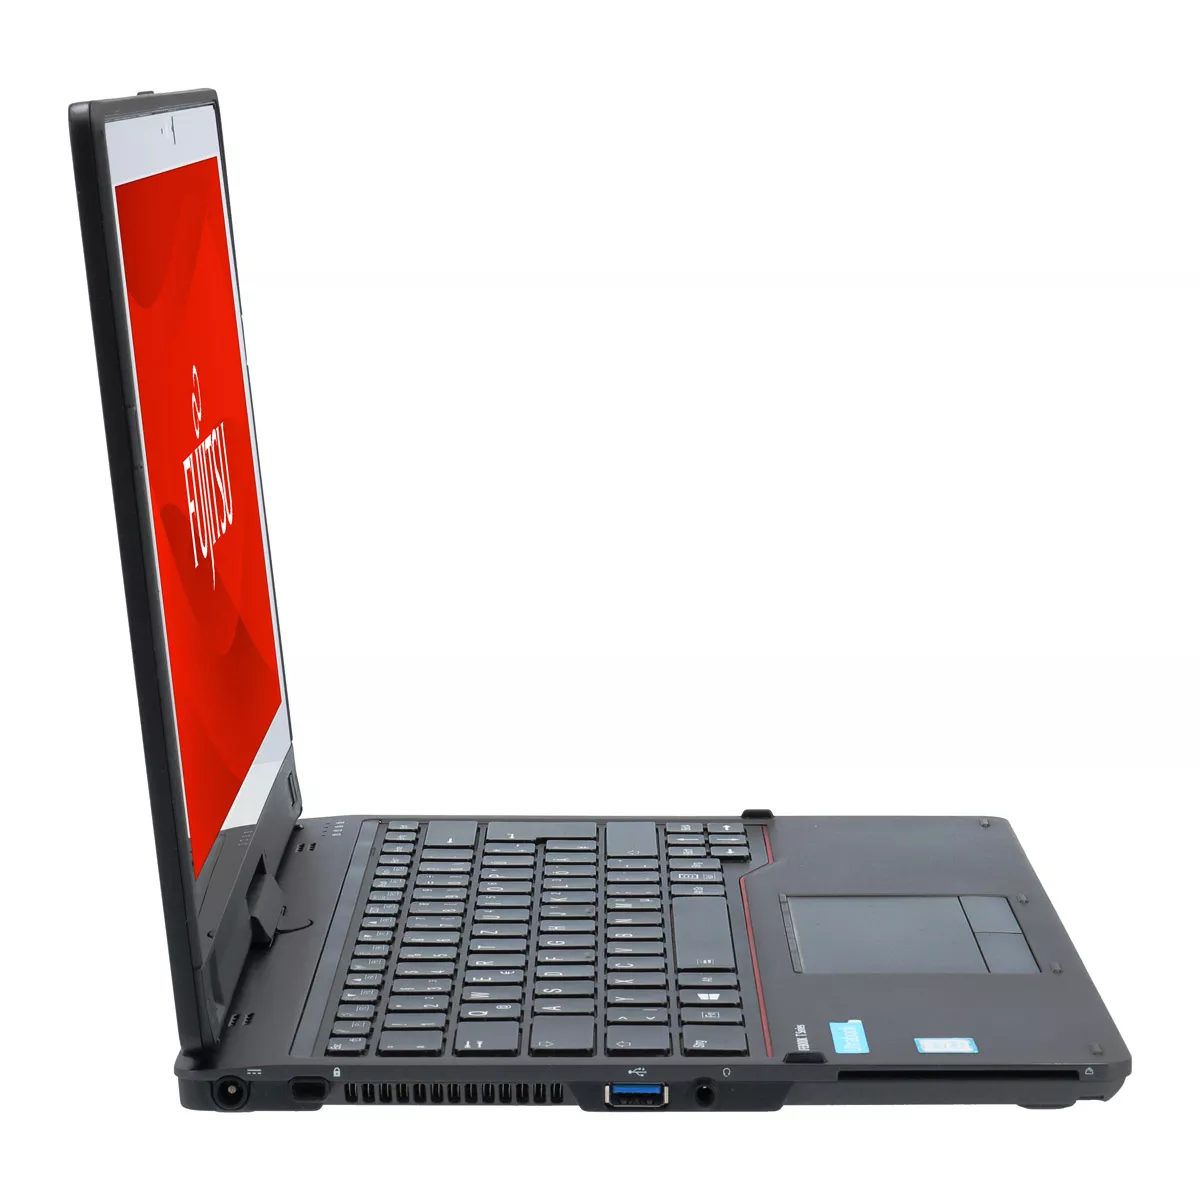 Fujitsu Lifebook T939 Core i5 8265U Full-HD Touch 240 GB M.2 SSD Webcam B